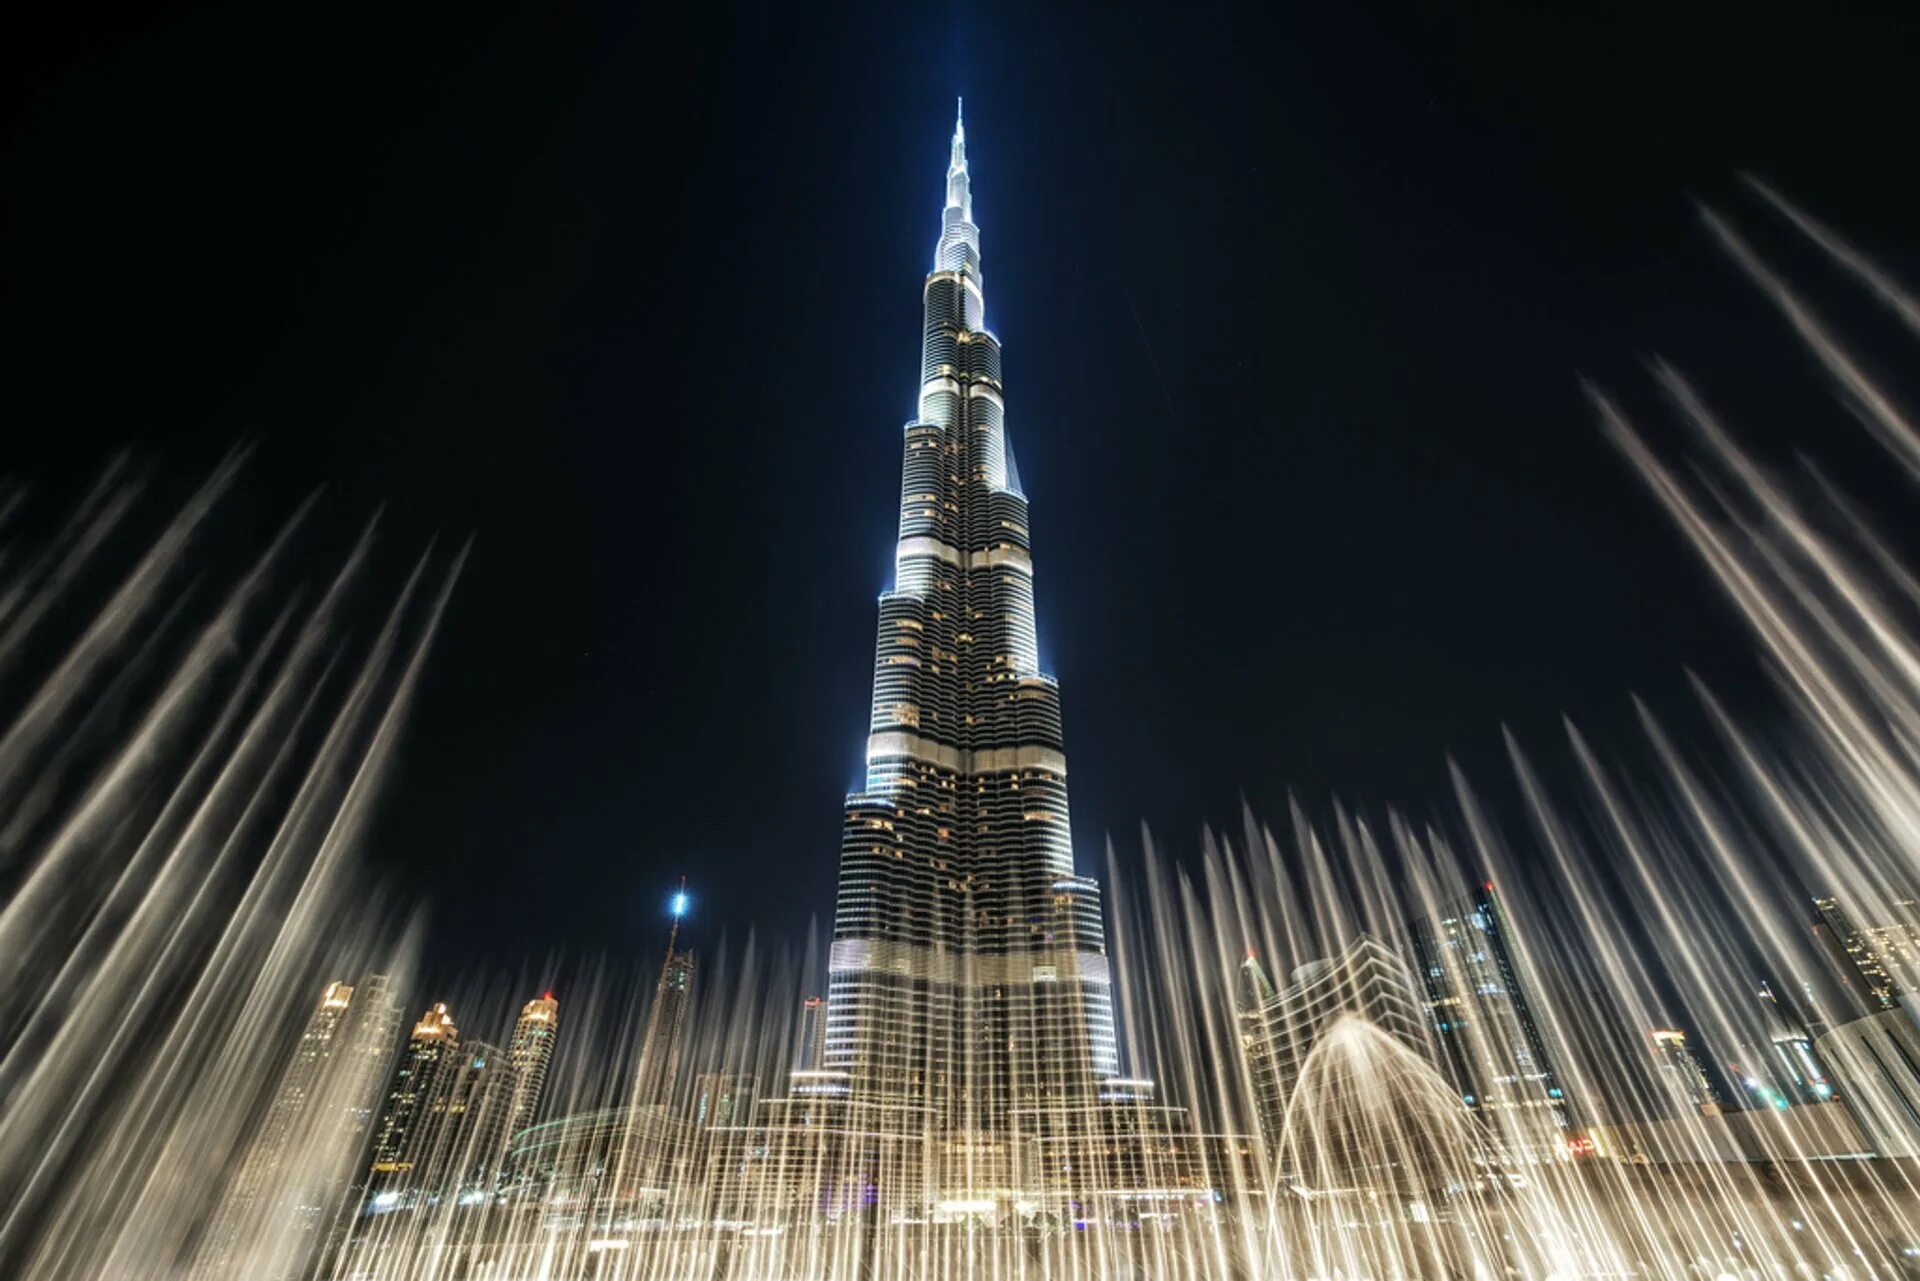 Бурдж халифа страна. Бурдж-Халифа Дубай. Небоскрёб Бурдж-Хали́фа (Дубай). Башня Бурдж-Халифа (Дубай, ОАЭ, Архитектор Эдриан Смит). Дубай здание Бурдж Халифа.